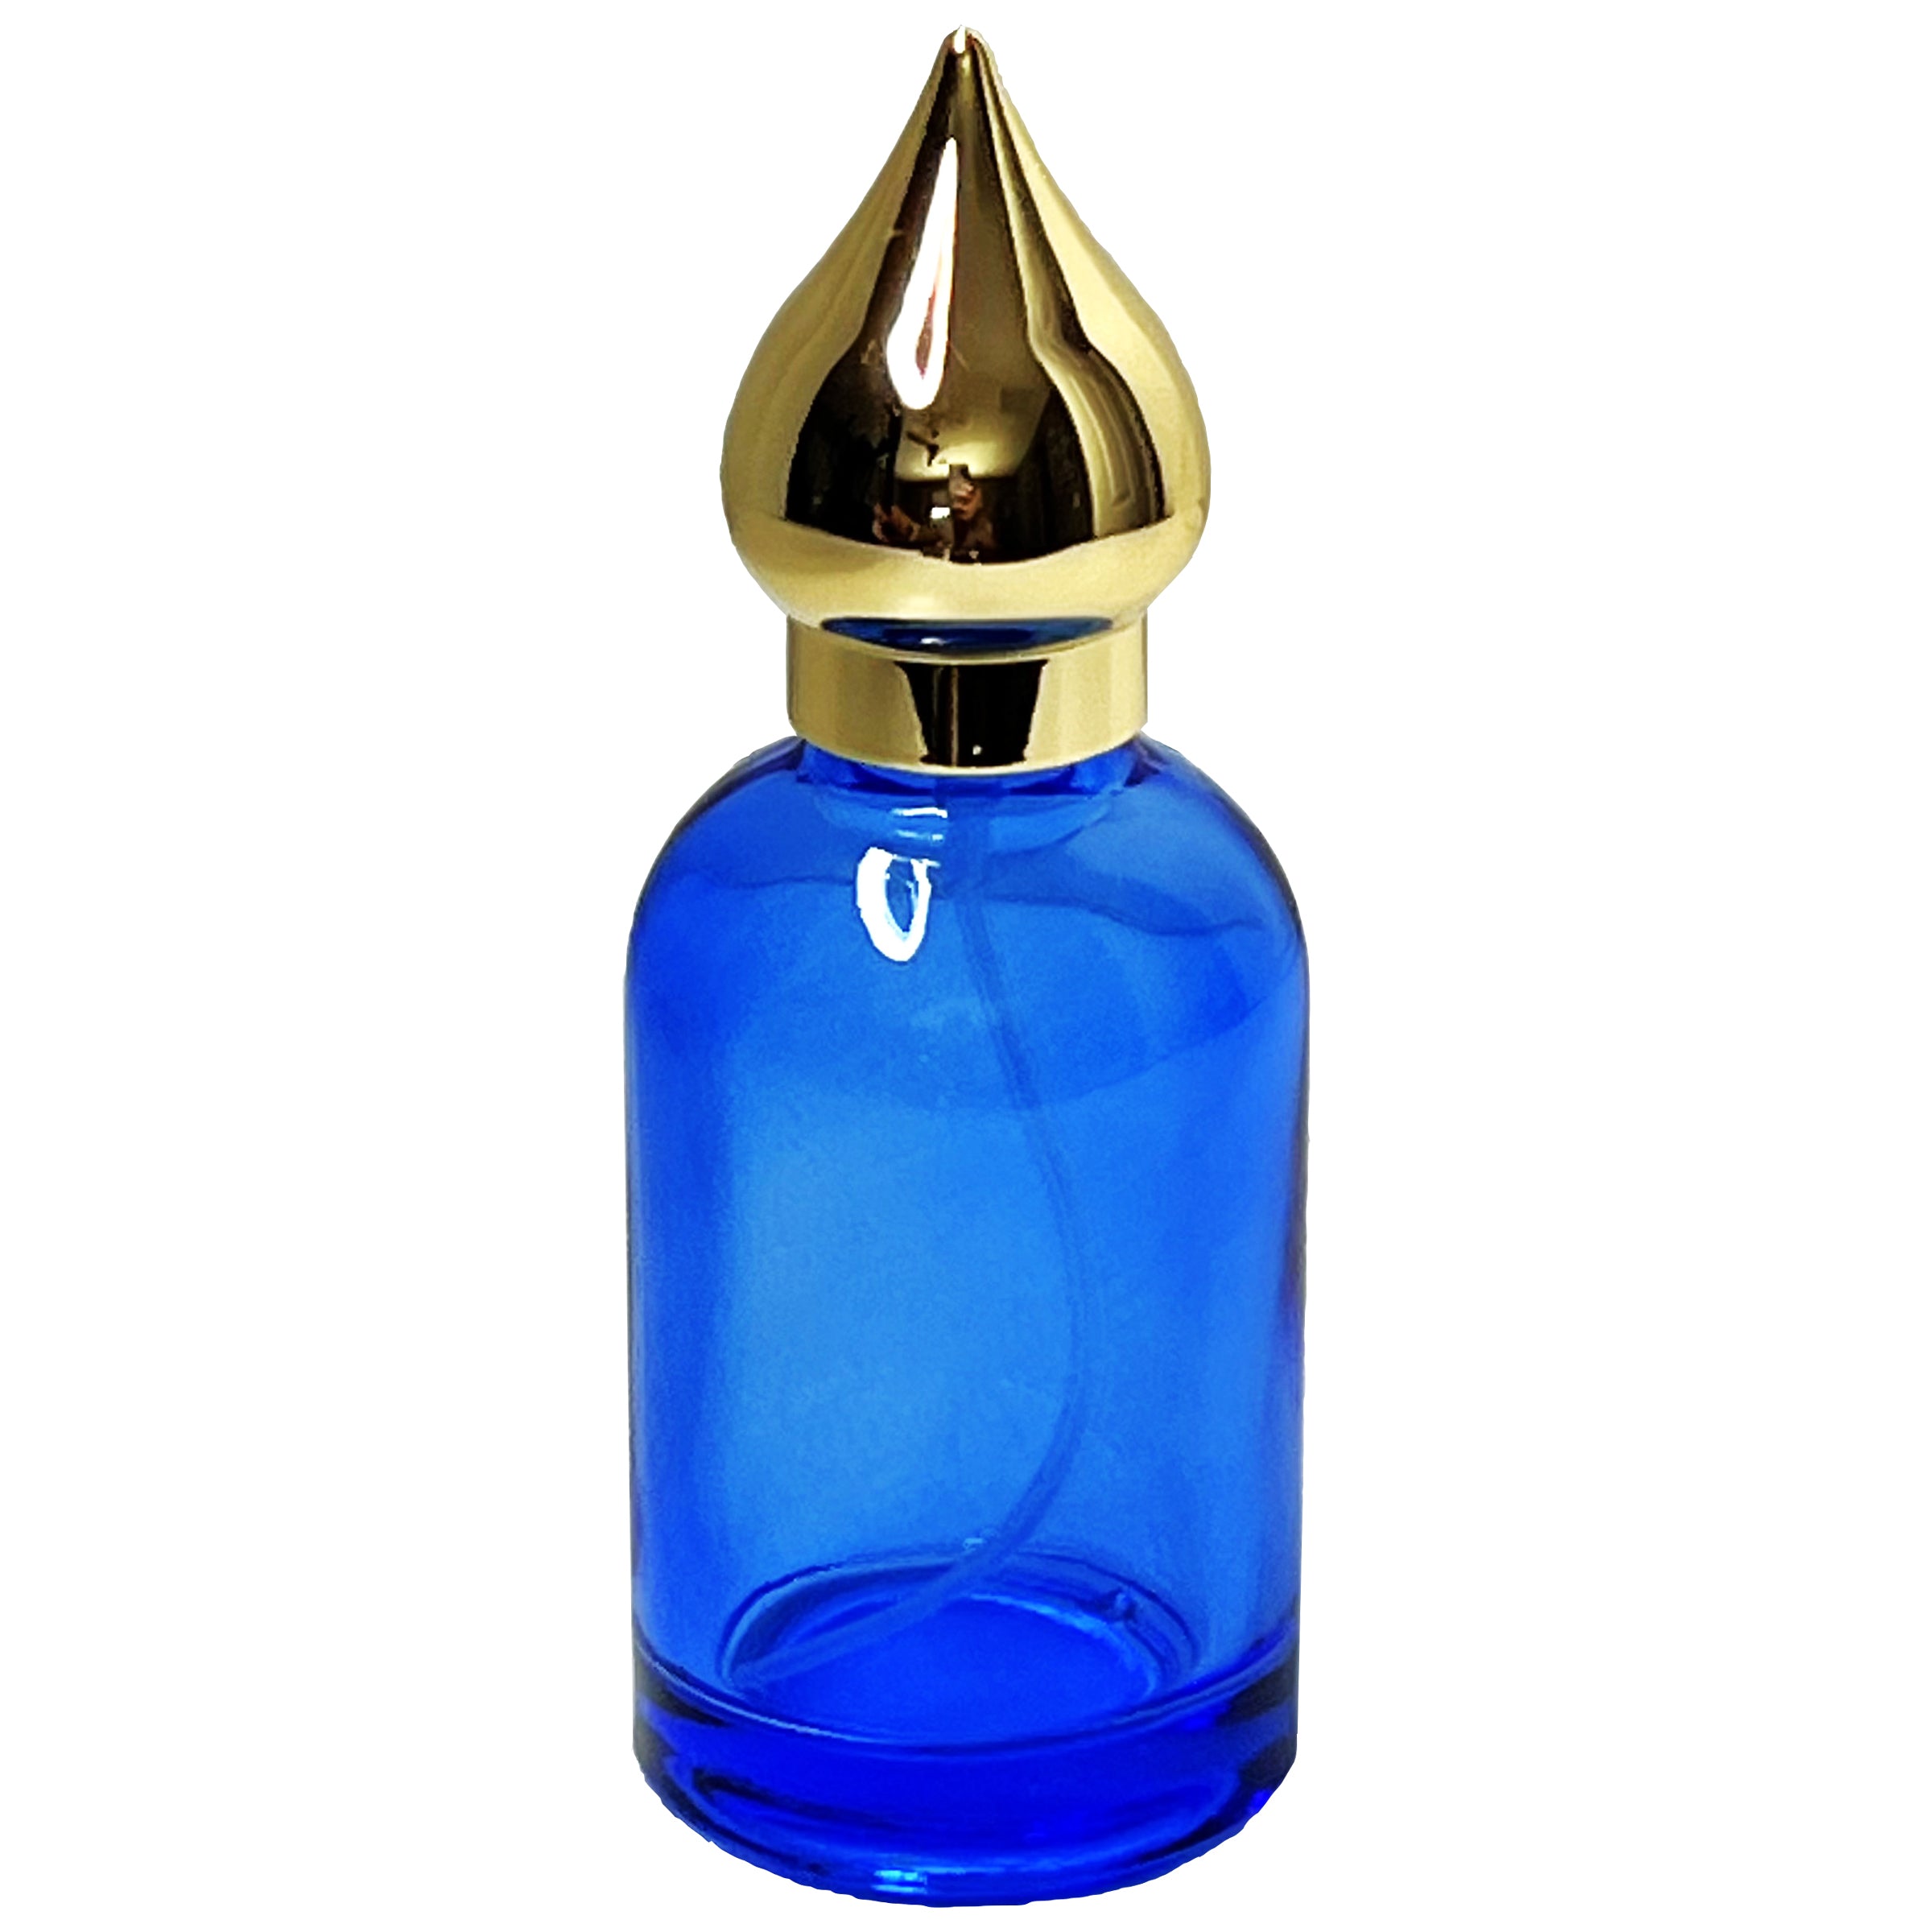 50ml 1.7oz Taj UV gold lids colored glass perfume spray bottles boxes